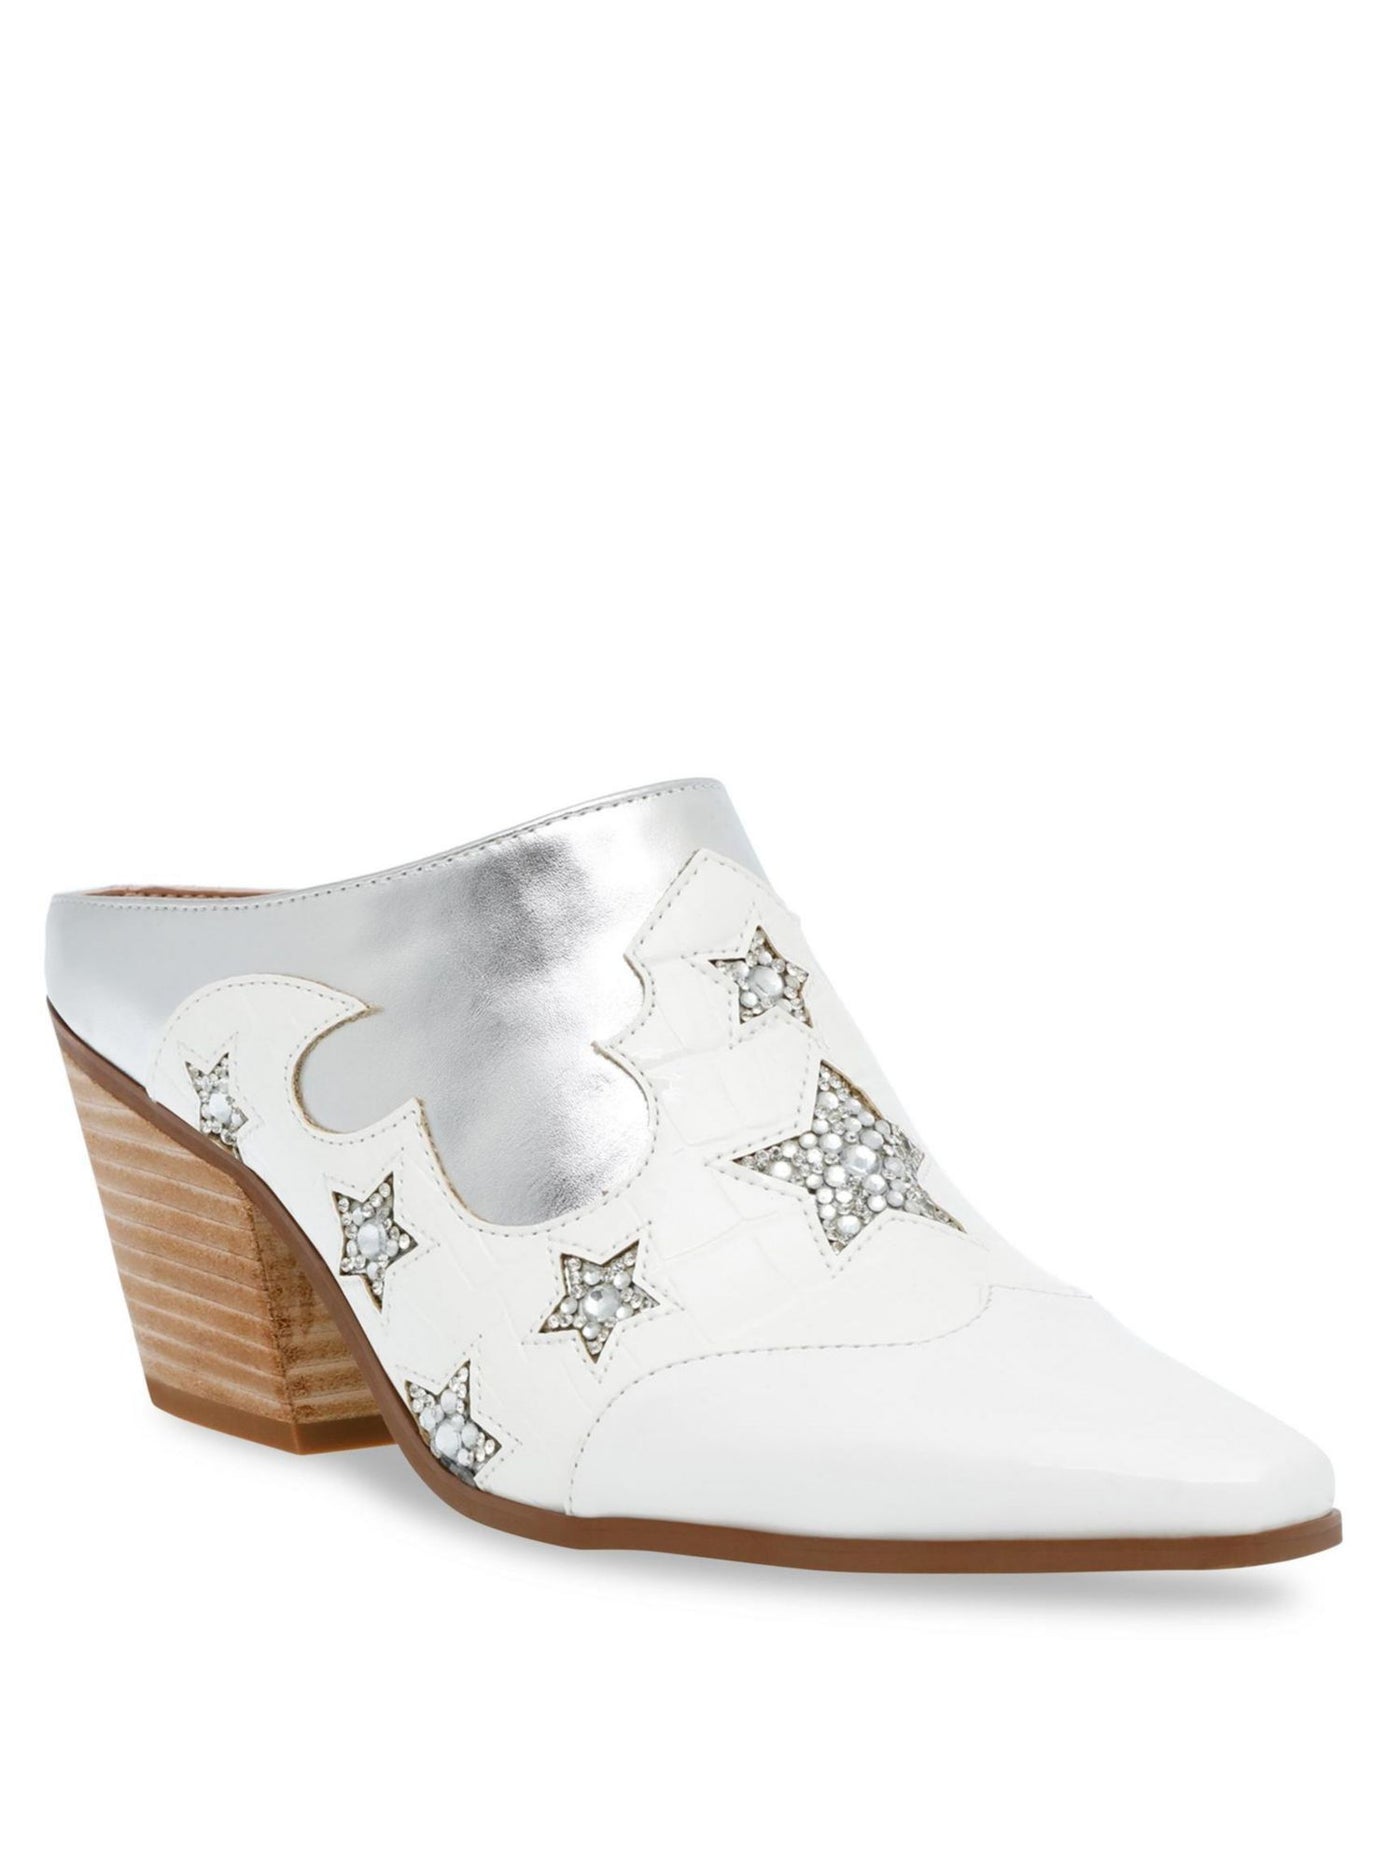 BETSEY JOHNSON Womens White Patterned Metallic Dennis Almond Toe Stacked Heel Slip On Heeled Mules Shoes 9.5 M